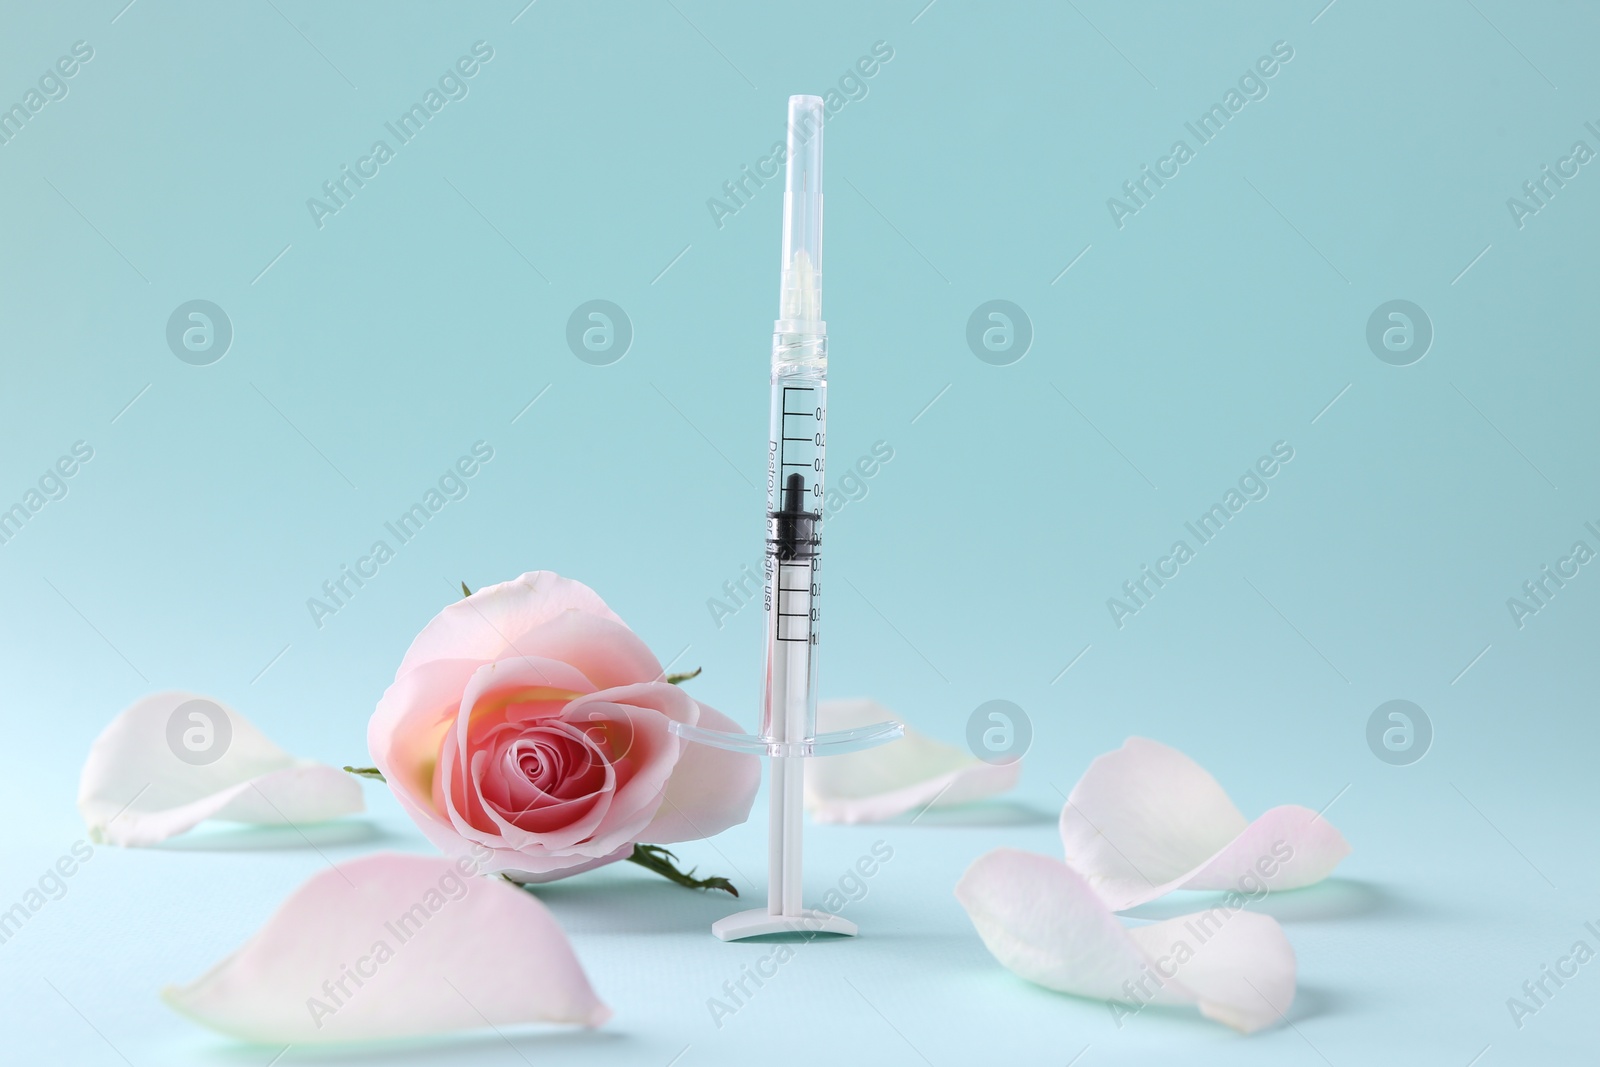 Photo of Cosmetology. Medical syringe, rose flower and petals on light blue background